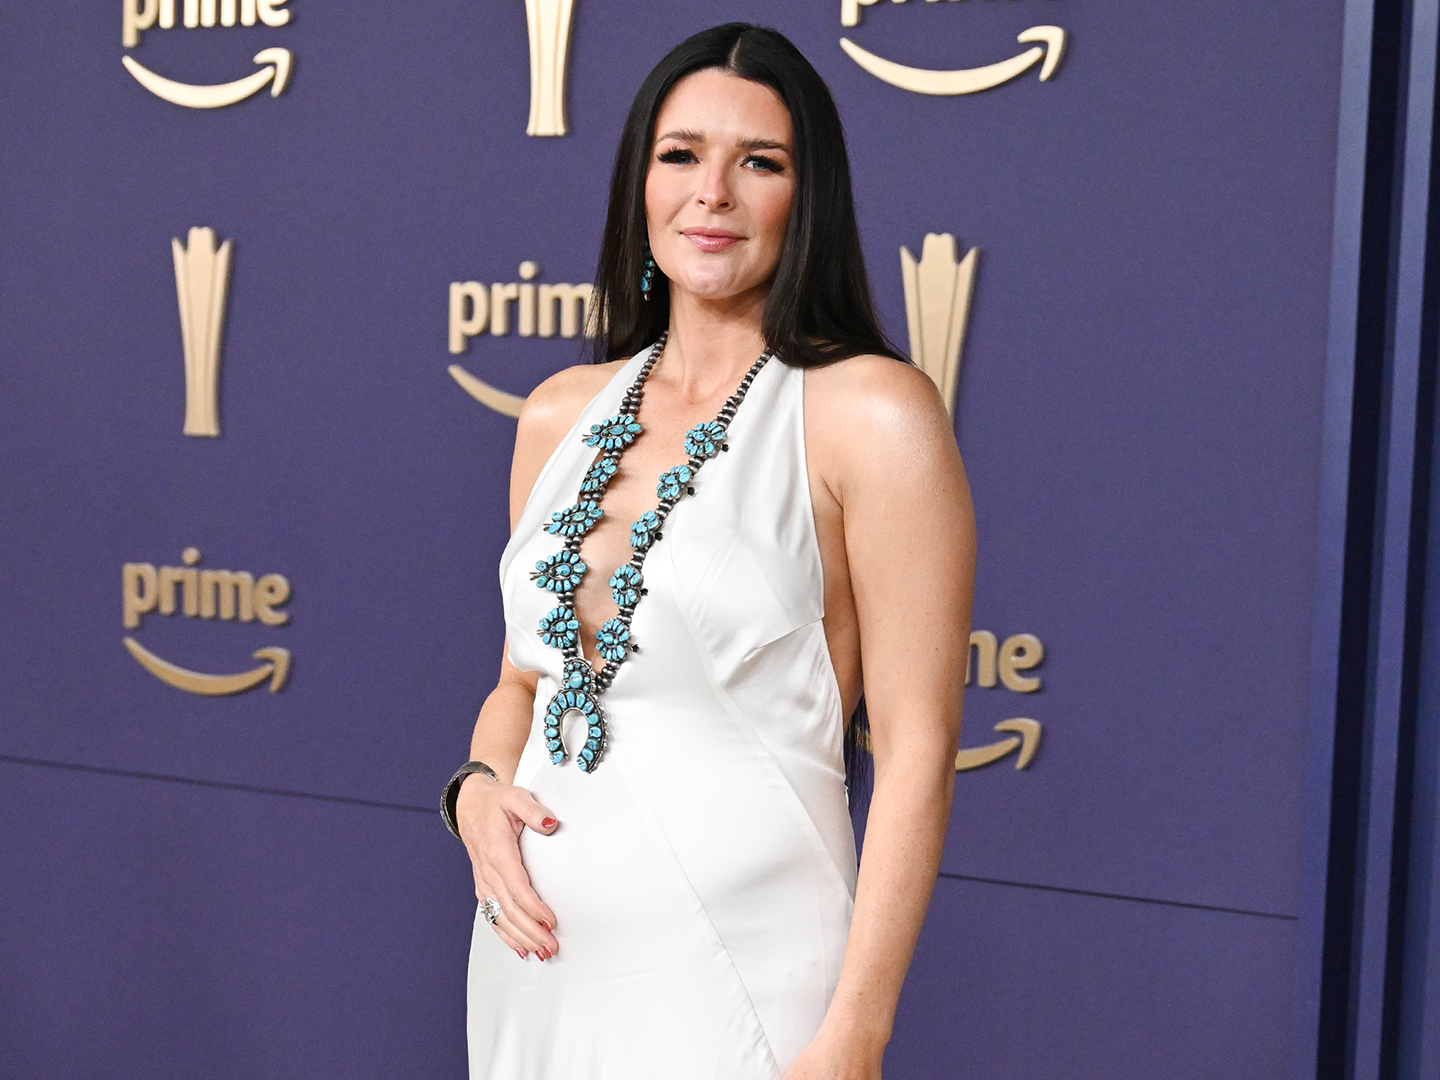 Red Carpet Fashion: Pregnant Celebrities' Baby Bump Photos